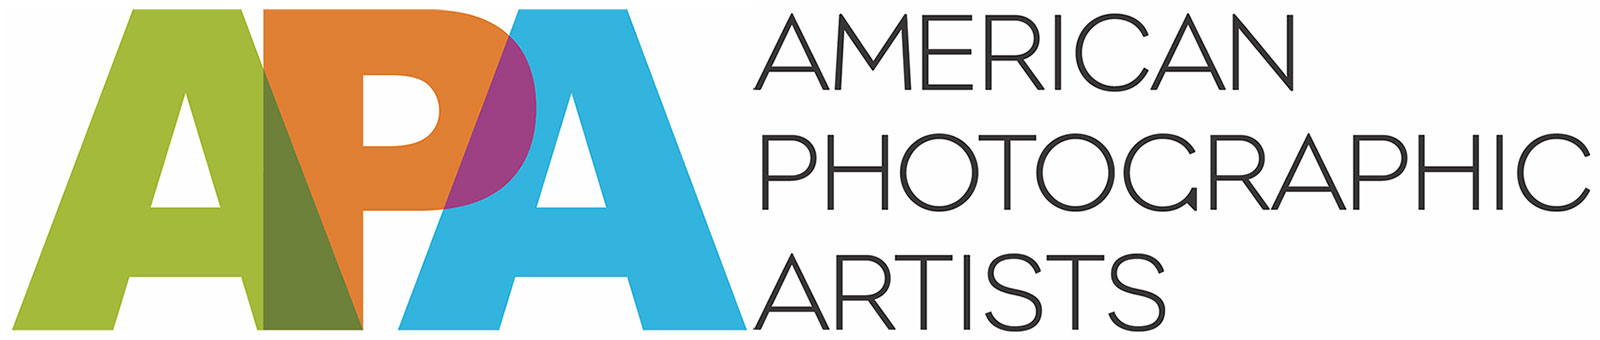 American-Photographic-Artists-logo